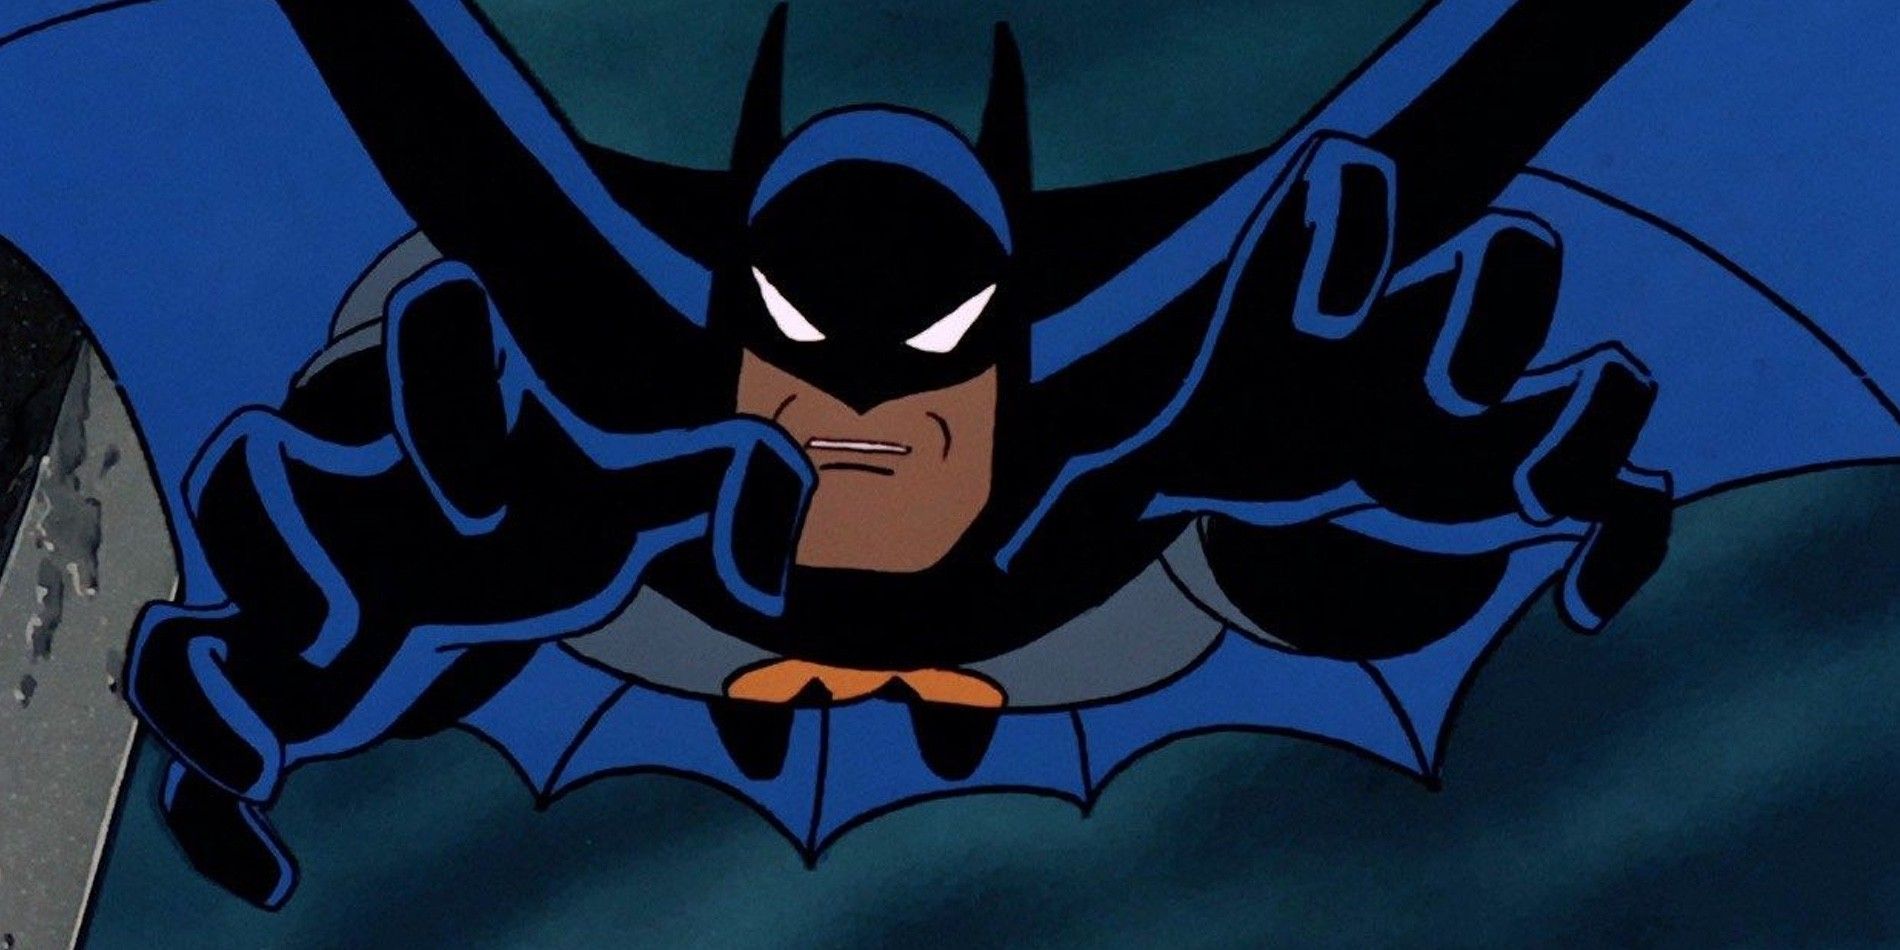 An animated Batman lunging toward the screen